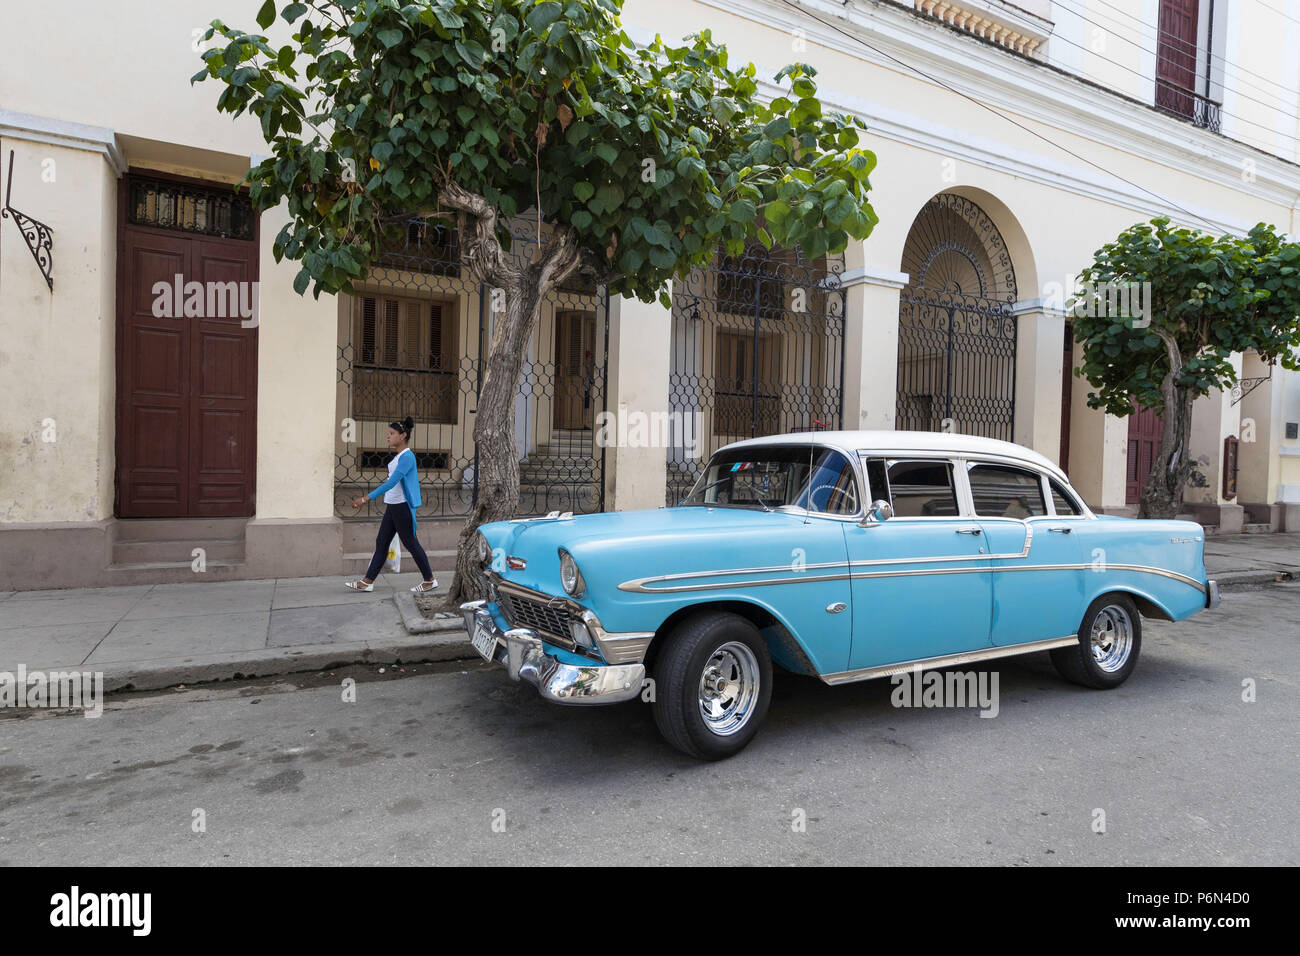 Classic 1956 Chevrolet Bel Air Taxi, lokal bekannt als "almendrones" in der Stadt Cienfuegos, Kuba. Stockfoto